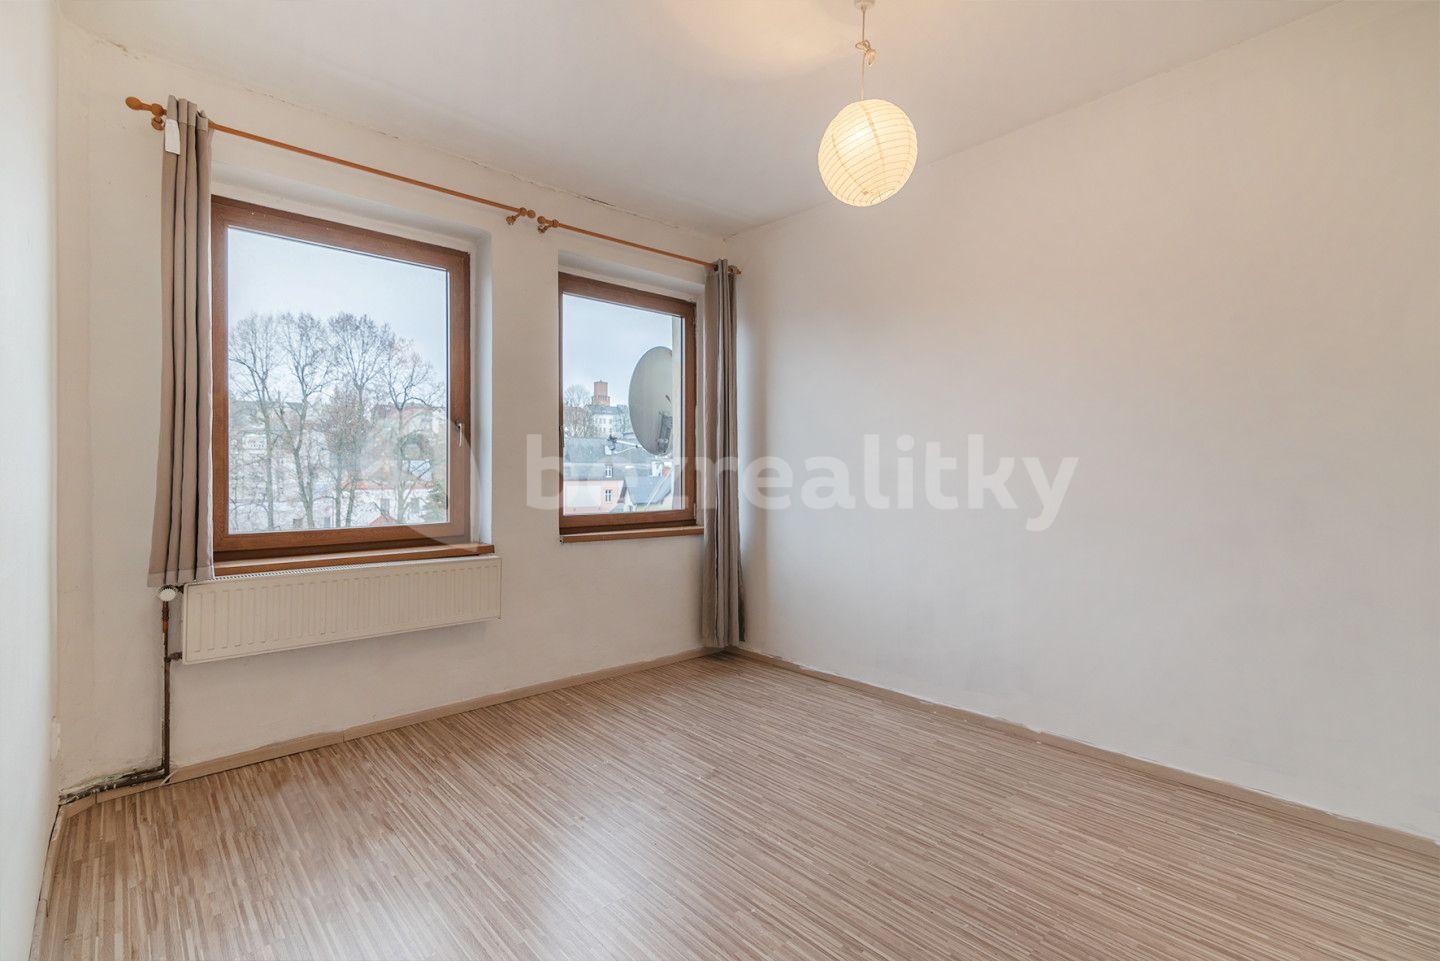 Predaj bytu 2-izbový 62 m², Smetanova, Jablonec nad Nisou, Liberecký kraj